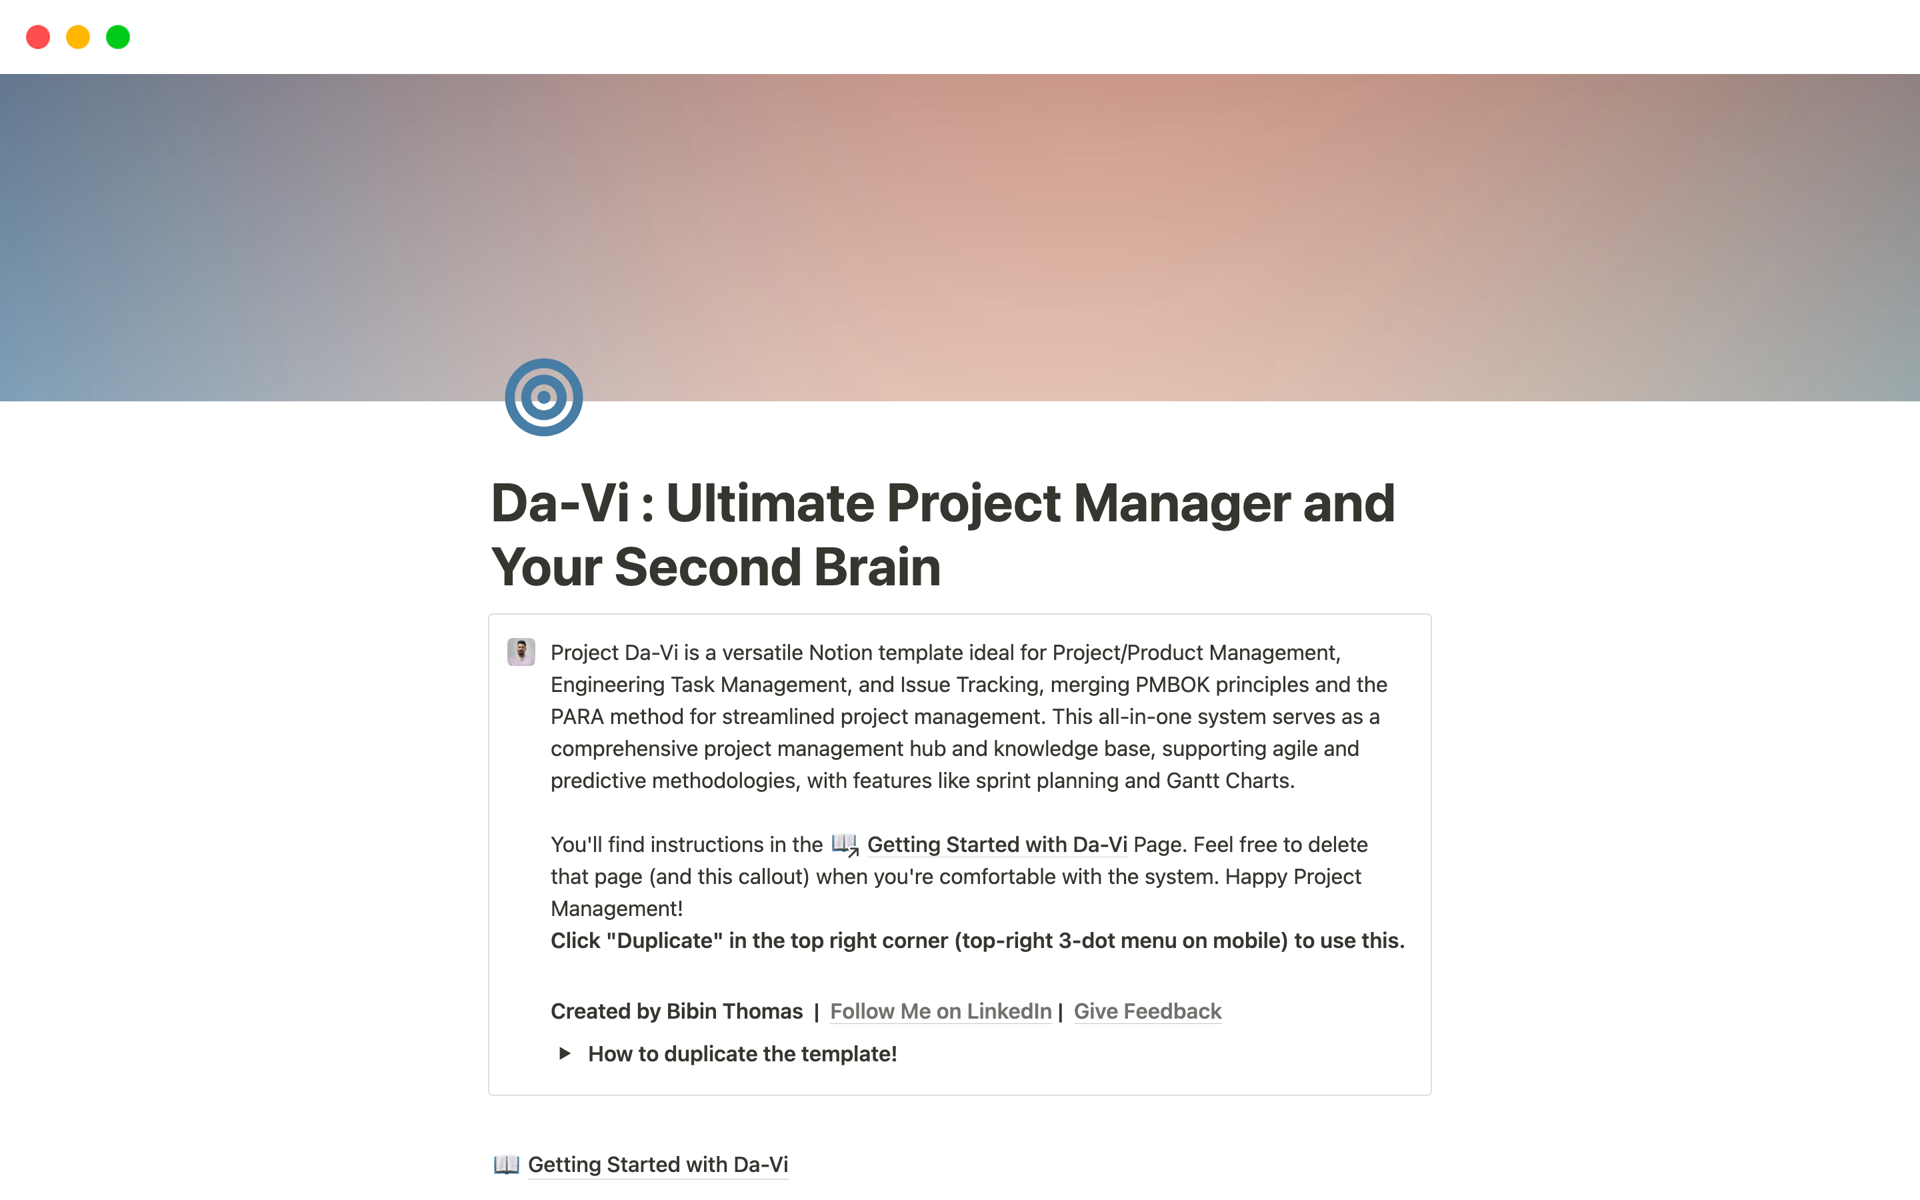 Aperçu du modèle de Da-Vi:Ultimate Project Manager & Your Second Brain